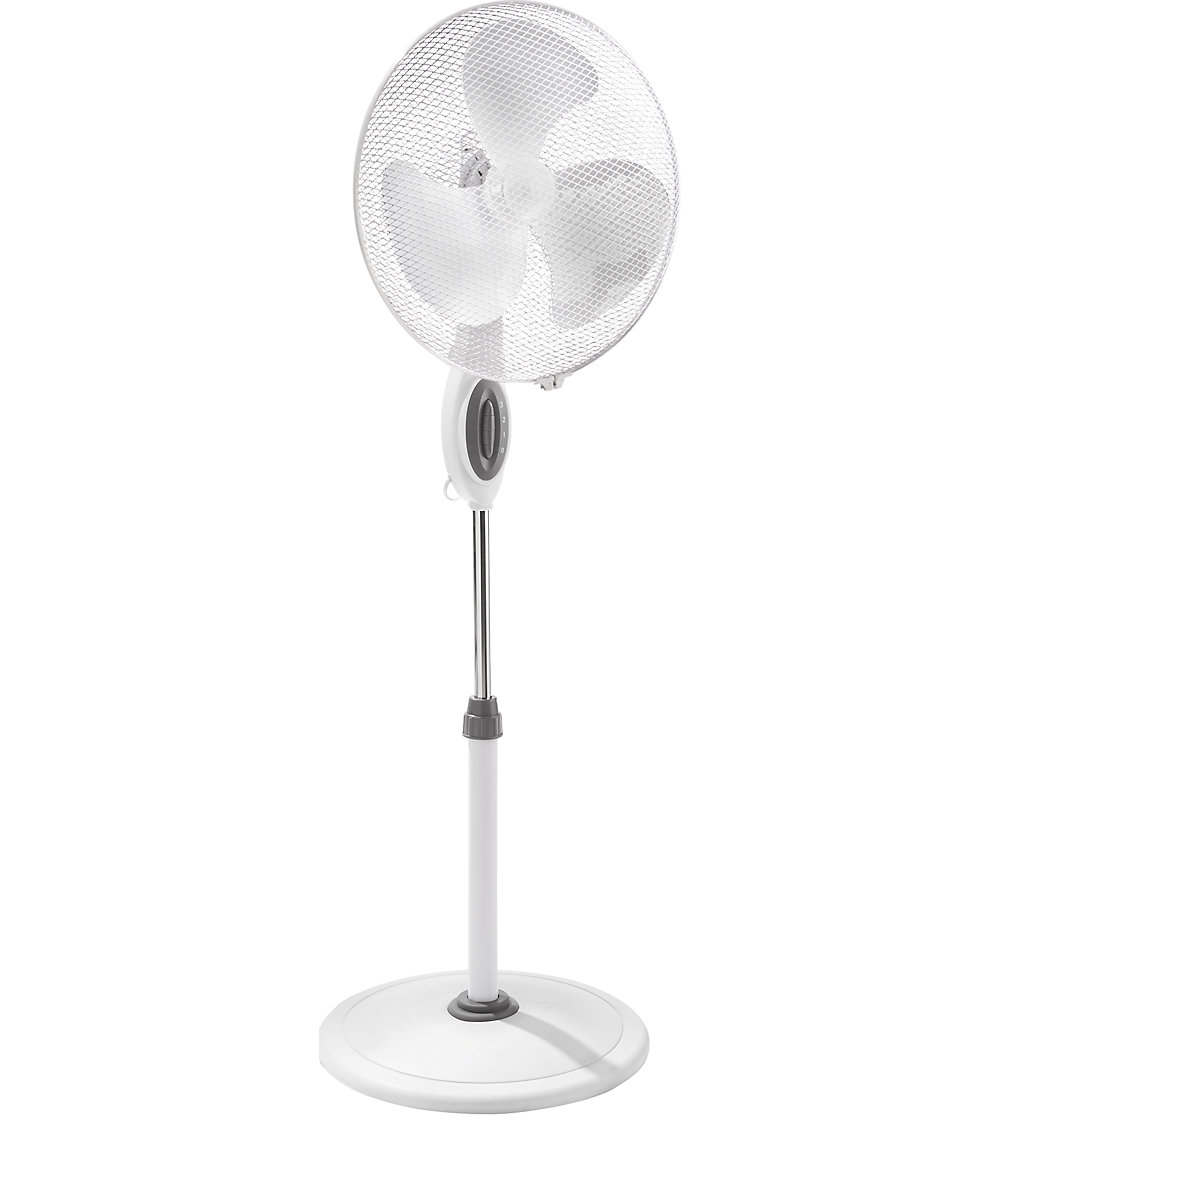 Pedestal fan with plastic housing